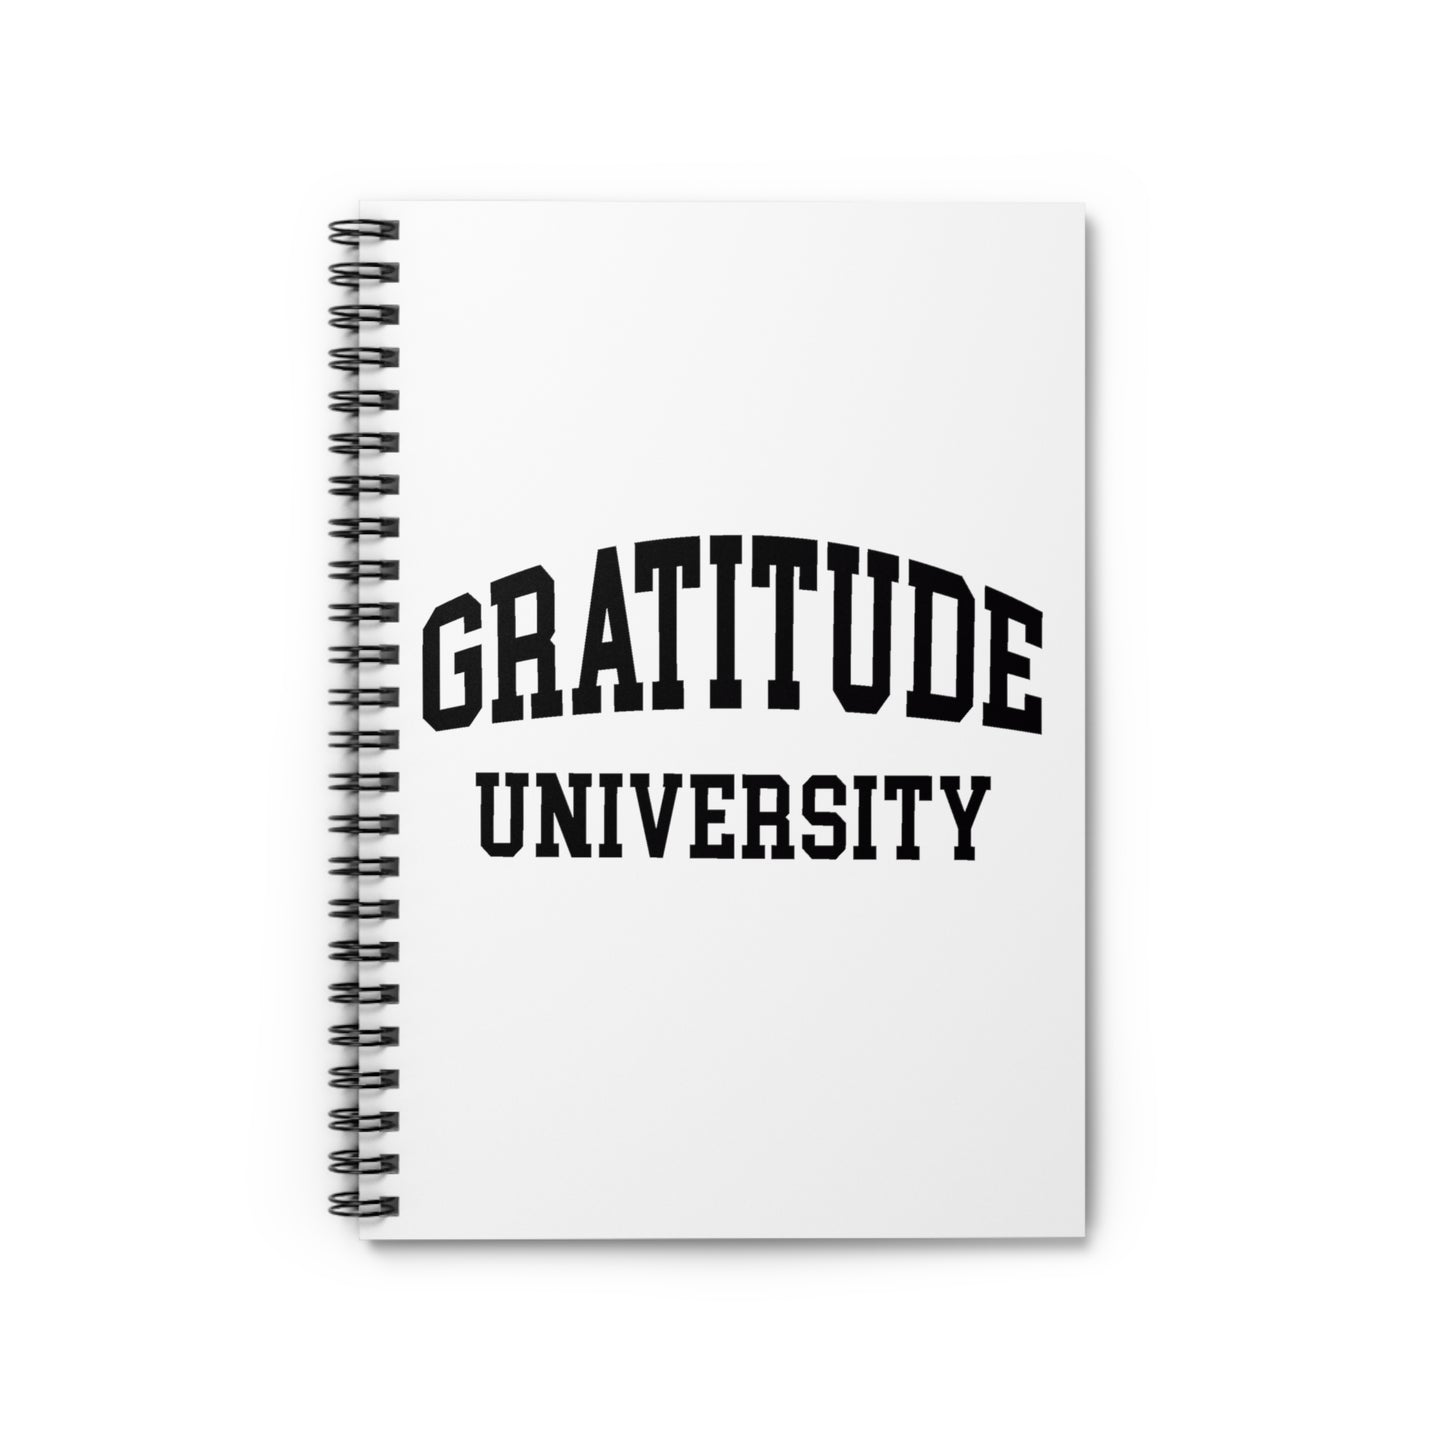 "Gratitude University" Journal